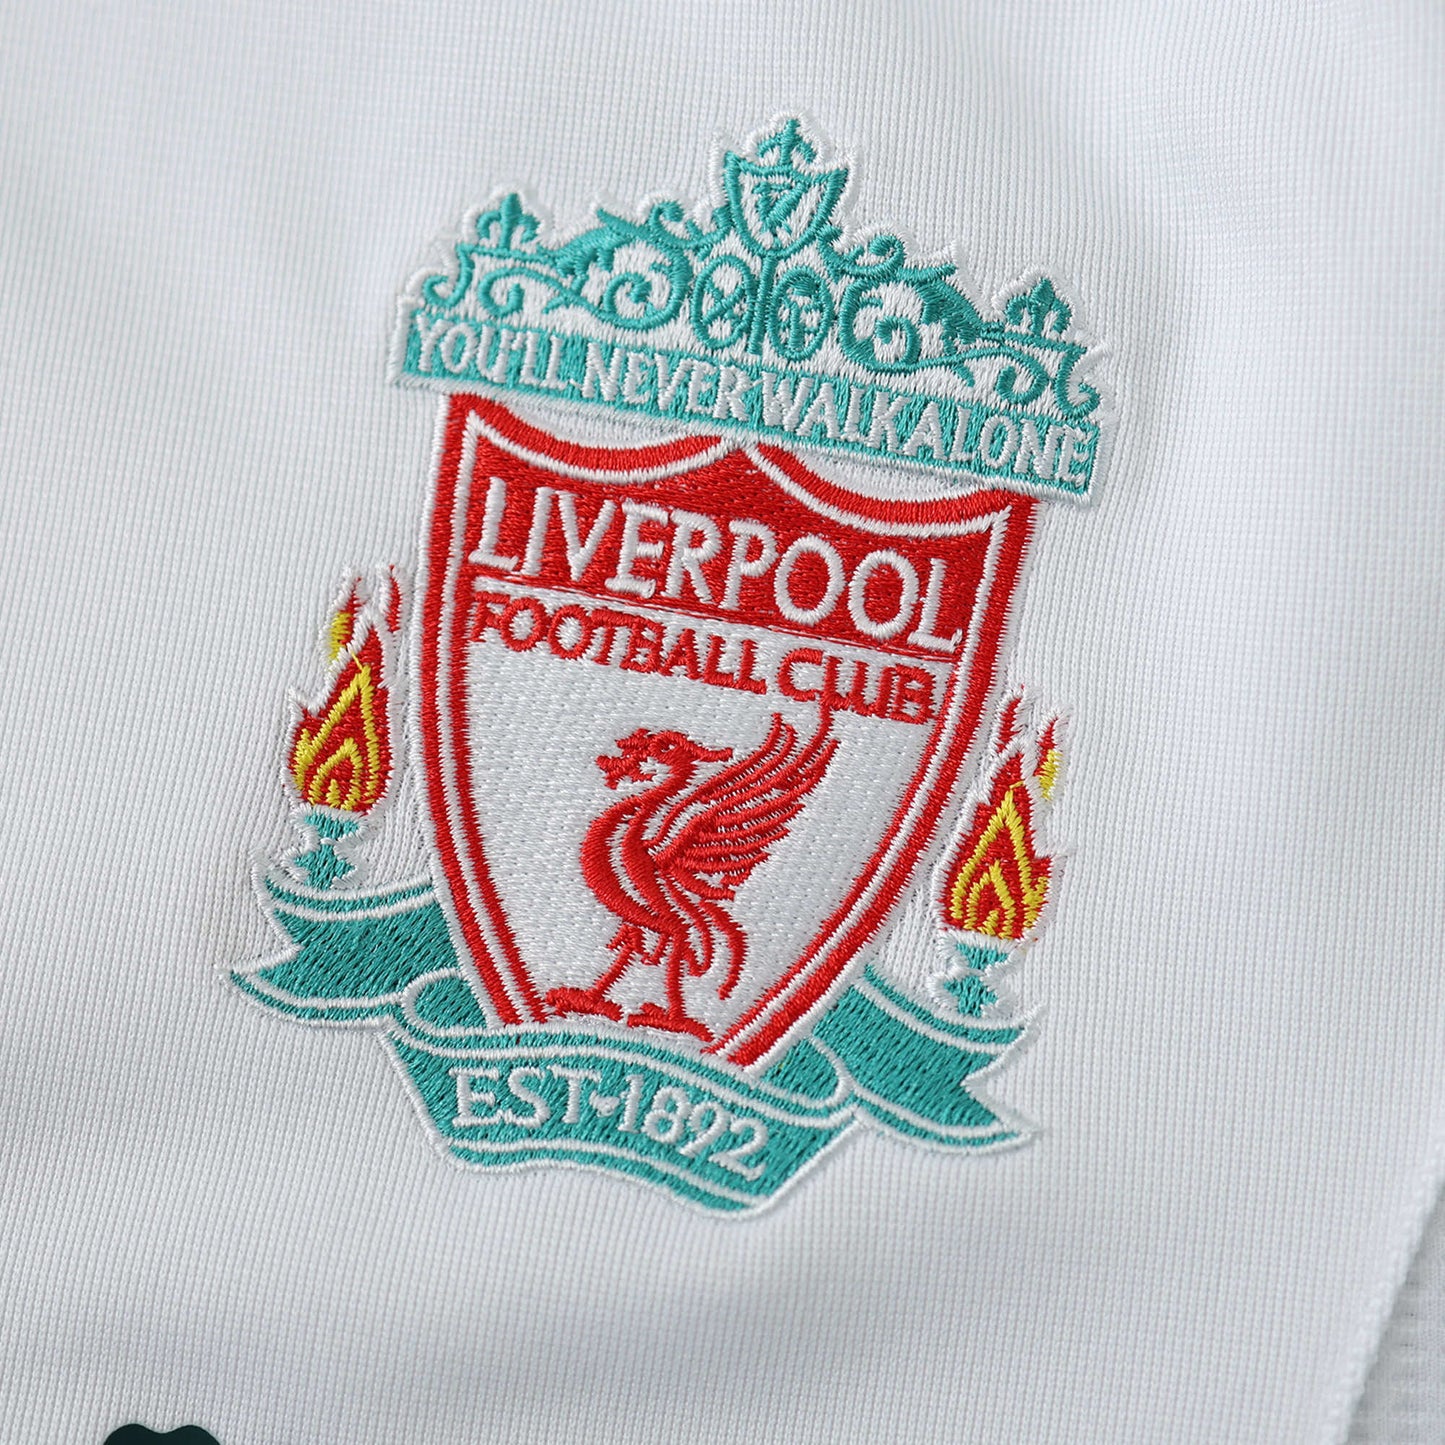 Liverpool FC 06-07 Away Shirt